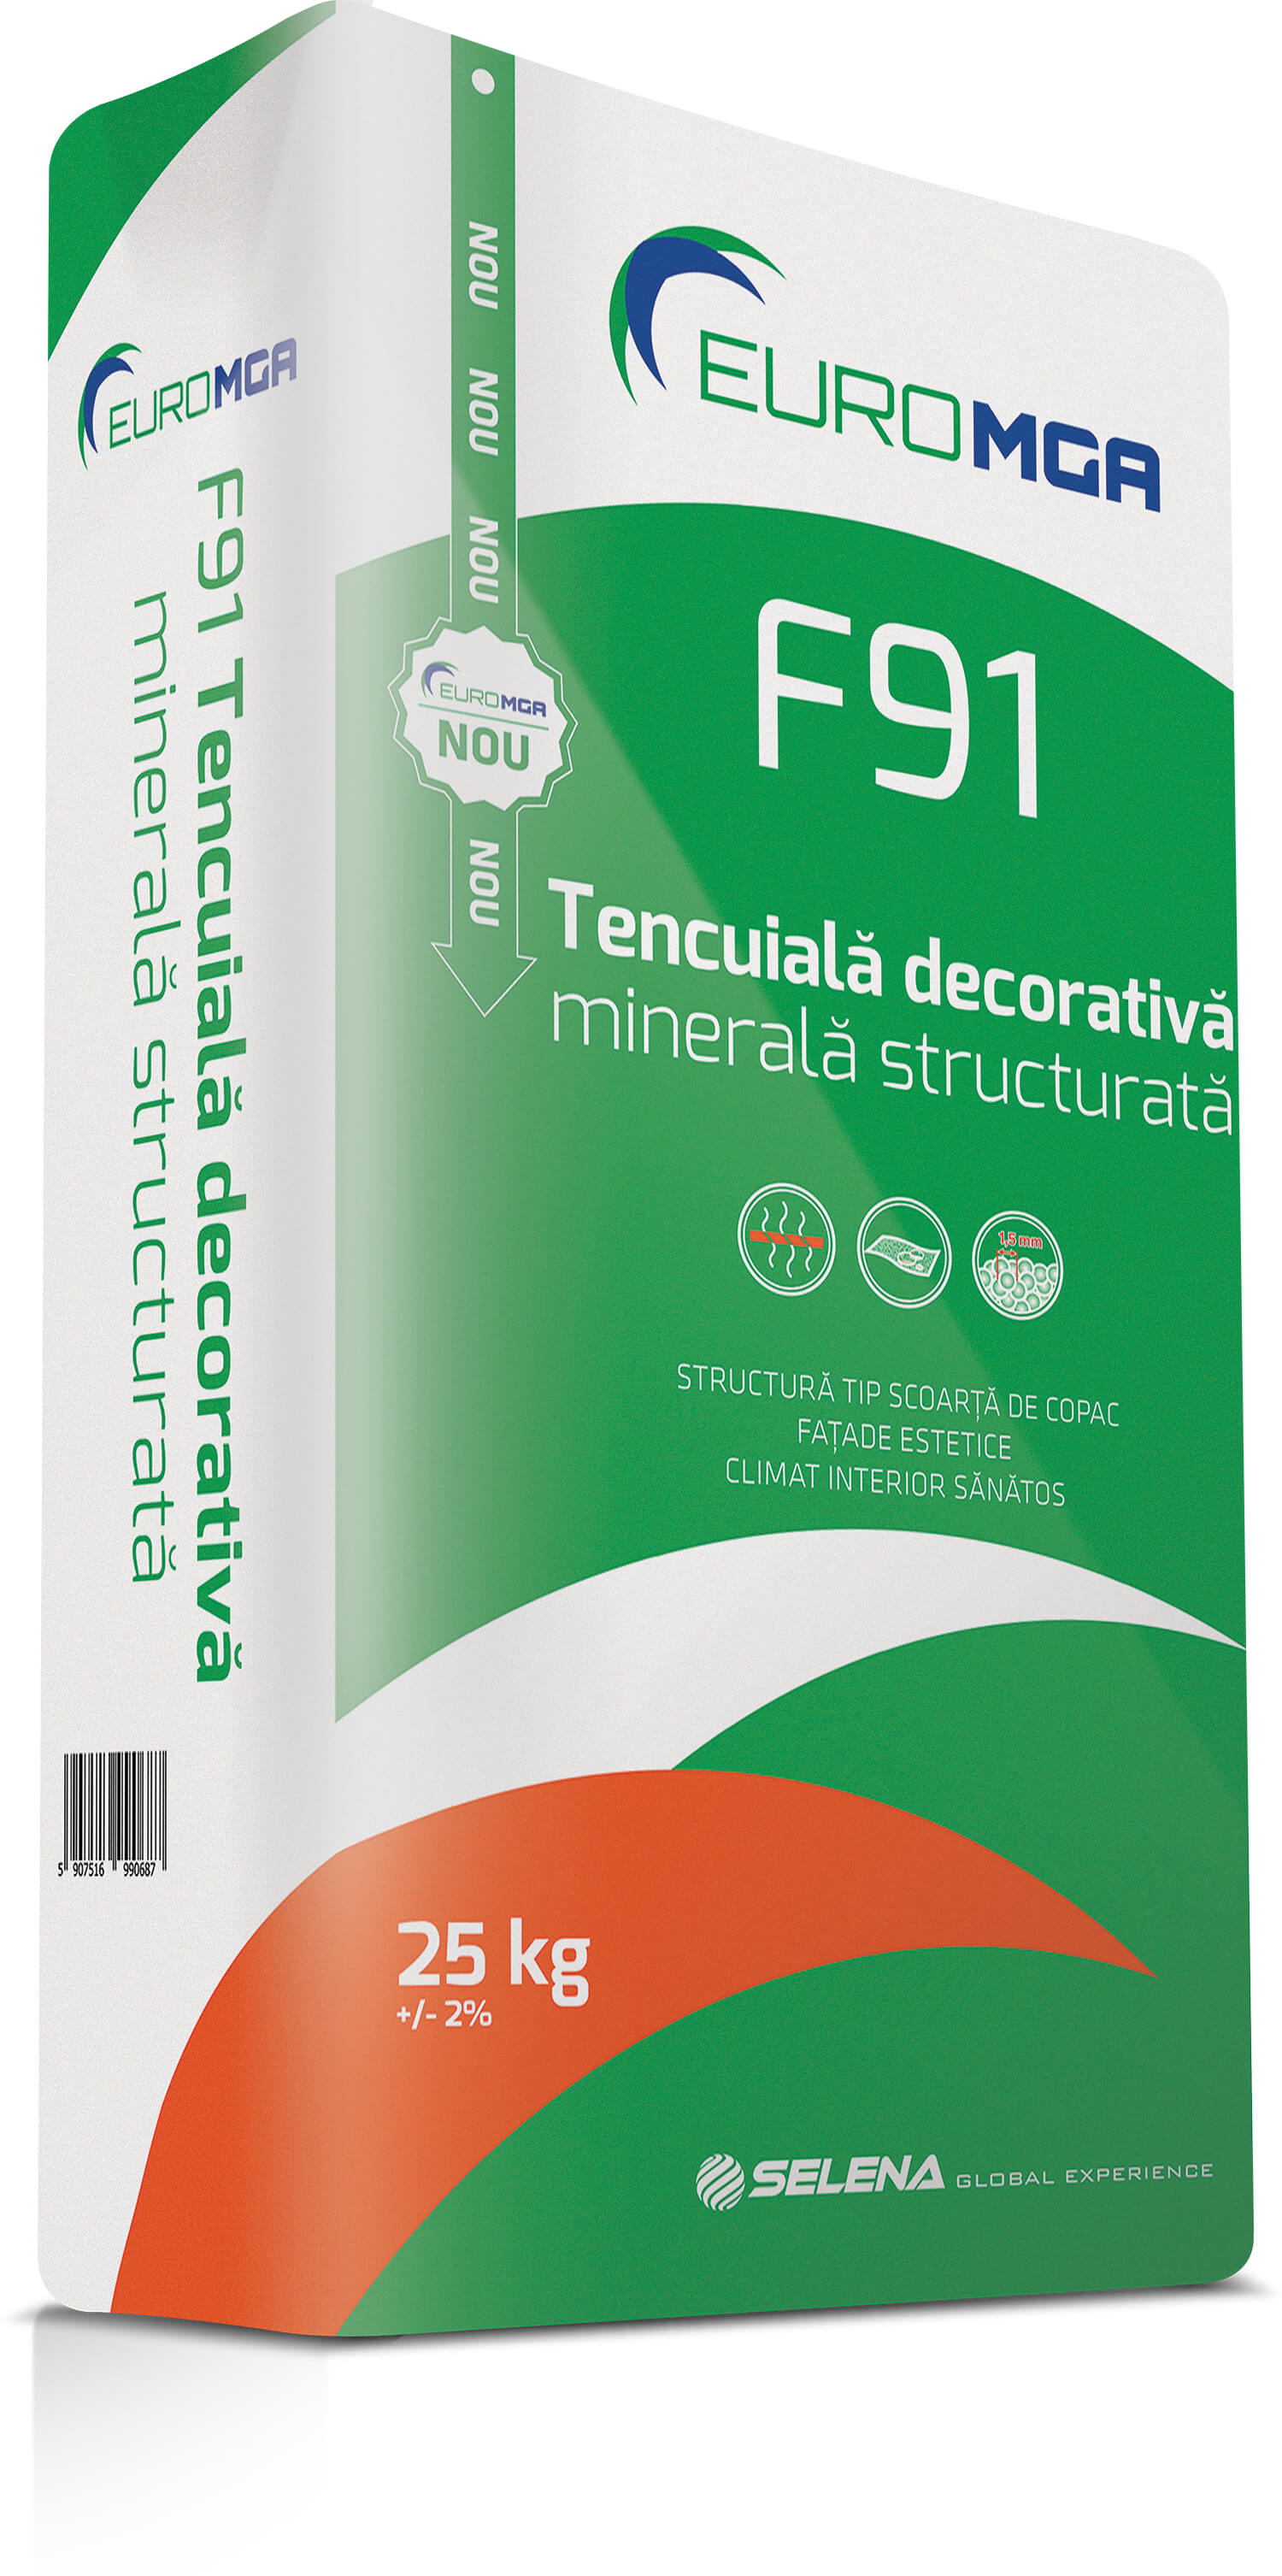 Tencuieli decorative - Tencuiala decorativa minerala structurata F91 EuroMGA 2.5mm 25KG, https:maxbau.ro